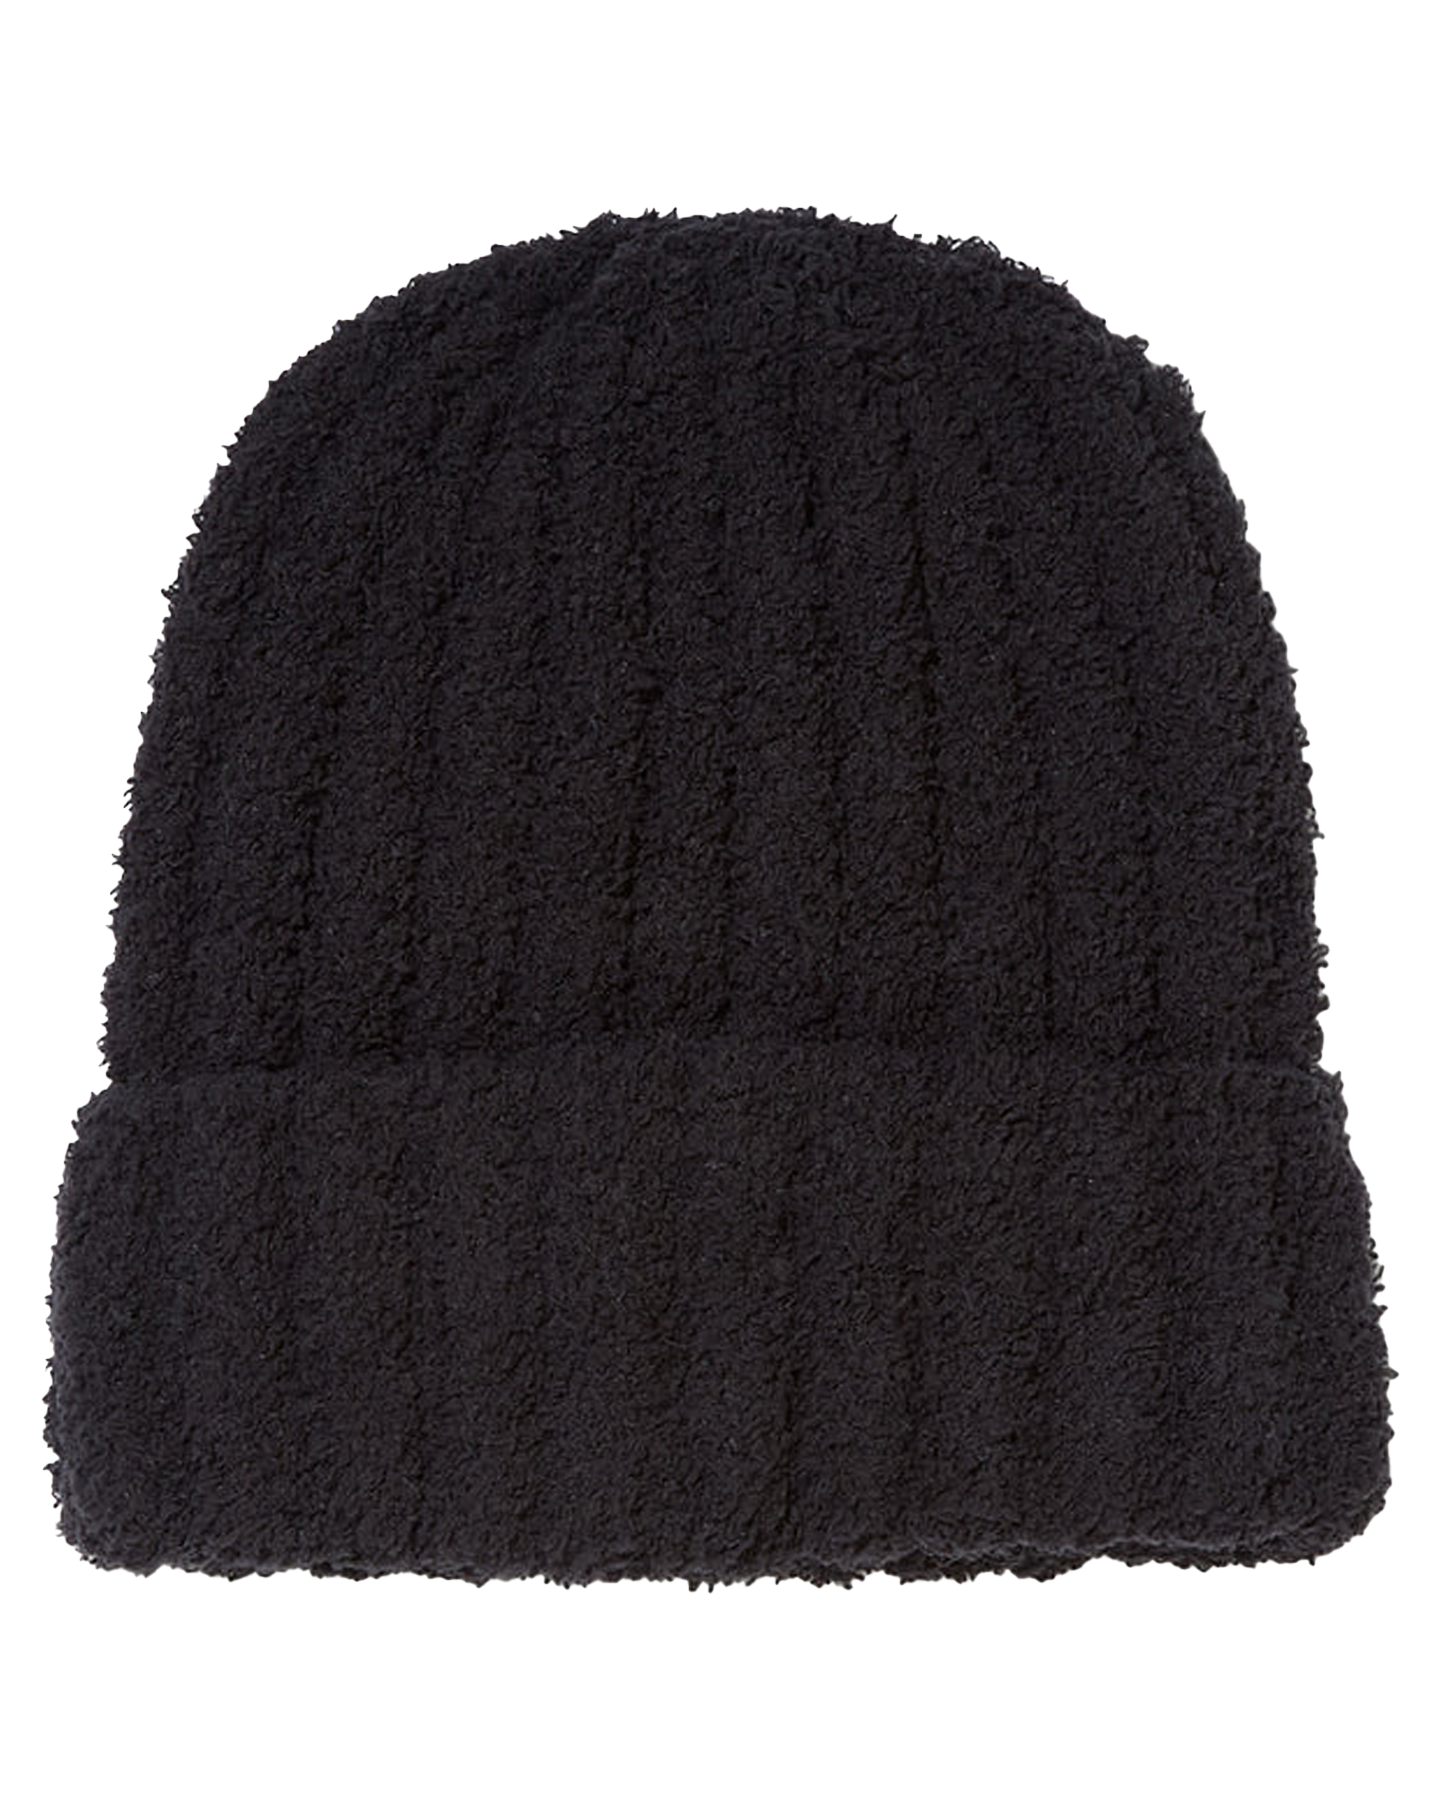 Spyder Cloud Knit Hat - Black Hats - SnowSkiersWarehouse